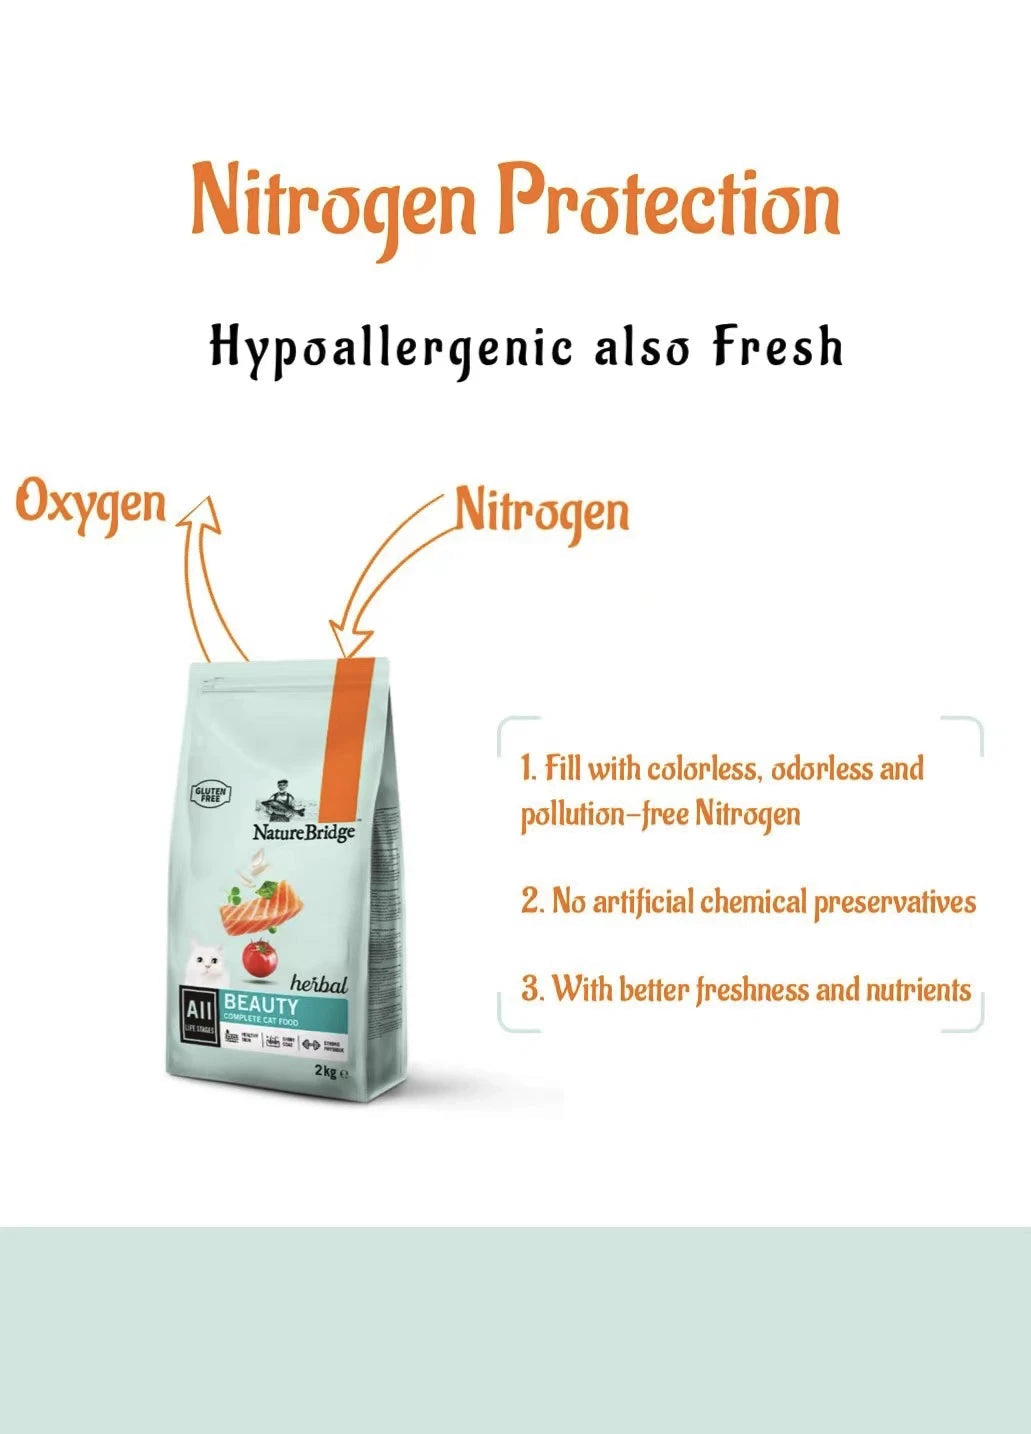 NatureBridge-Hypoallergenic Dry Cat Food and Biscuits- Beauty Cat- Nitrogen Protection